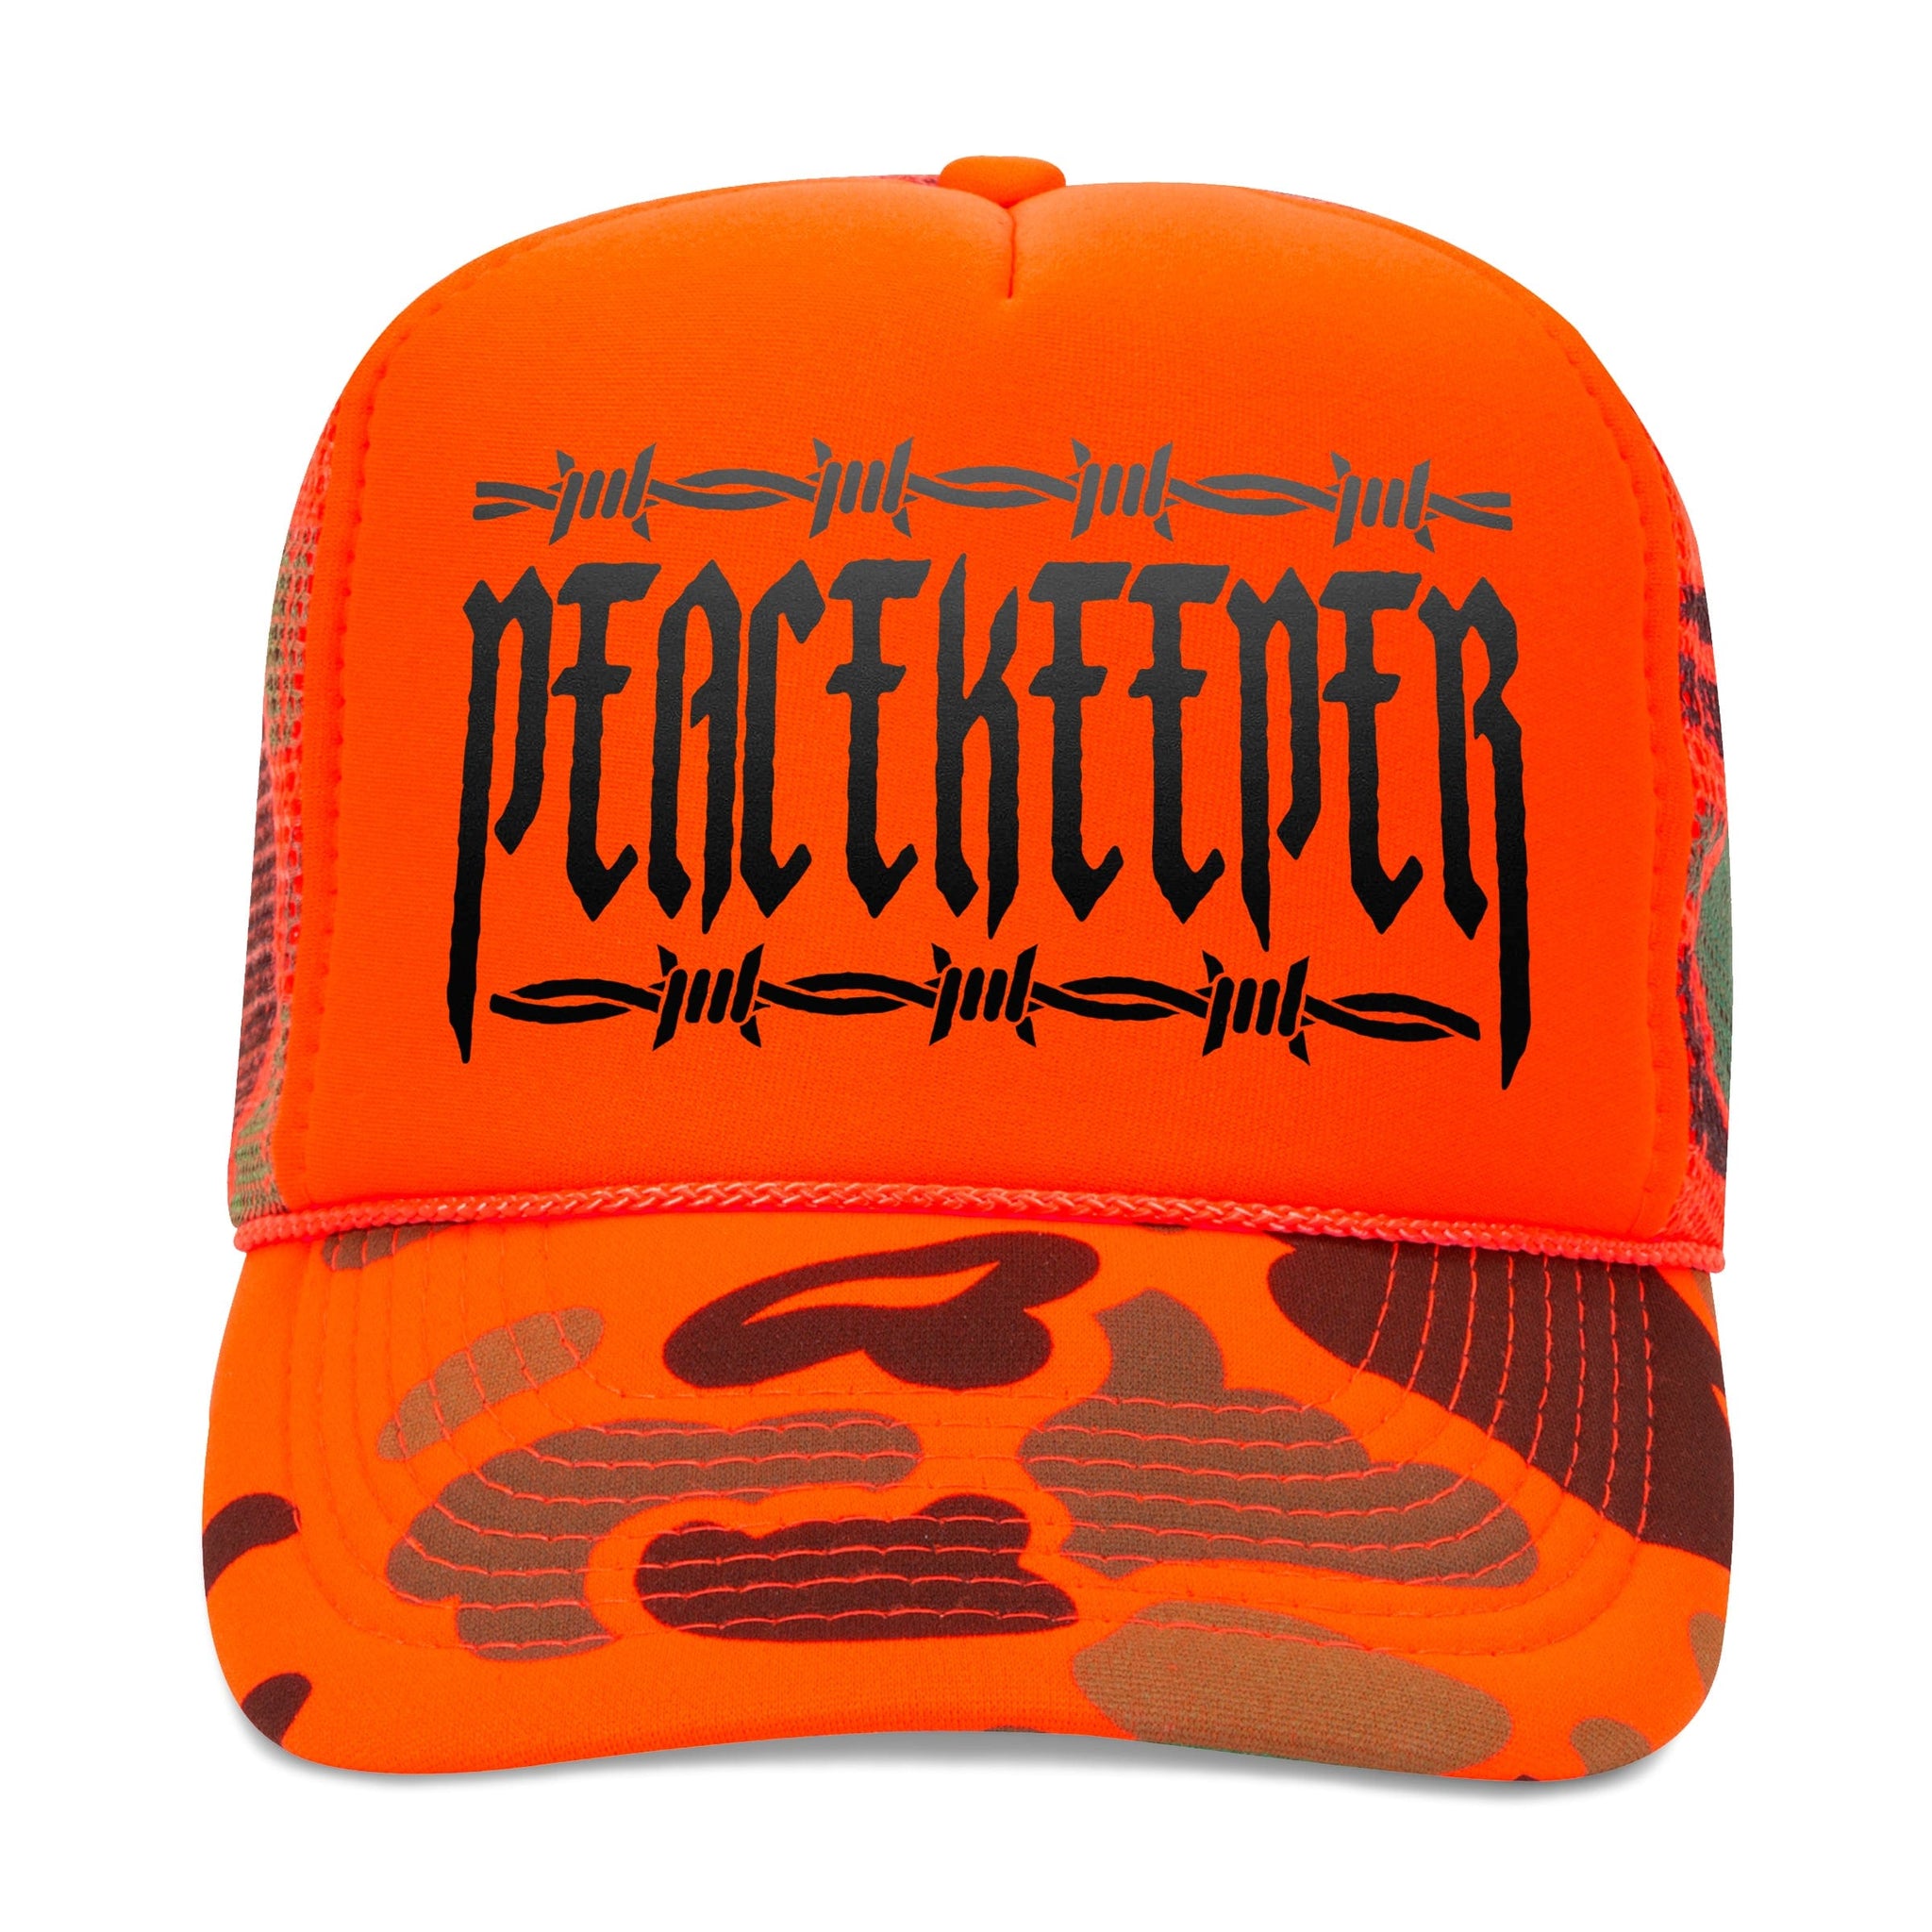 NEON 'PEACEKEEPER' TRUCKER HAT